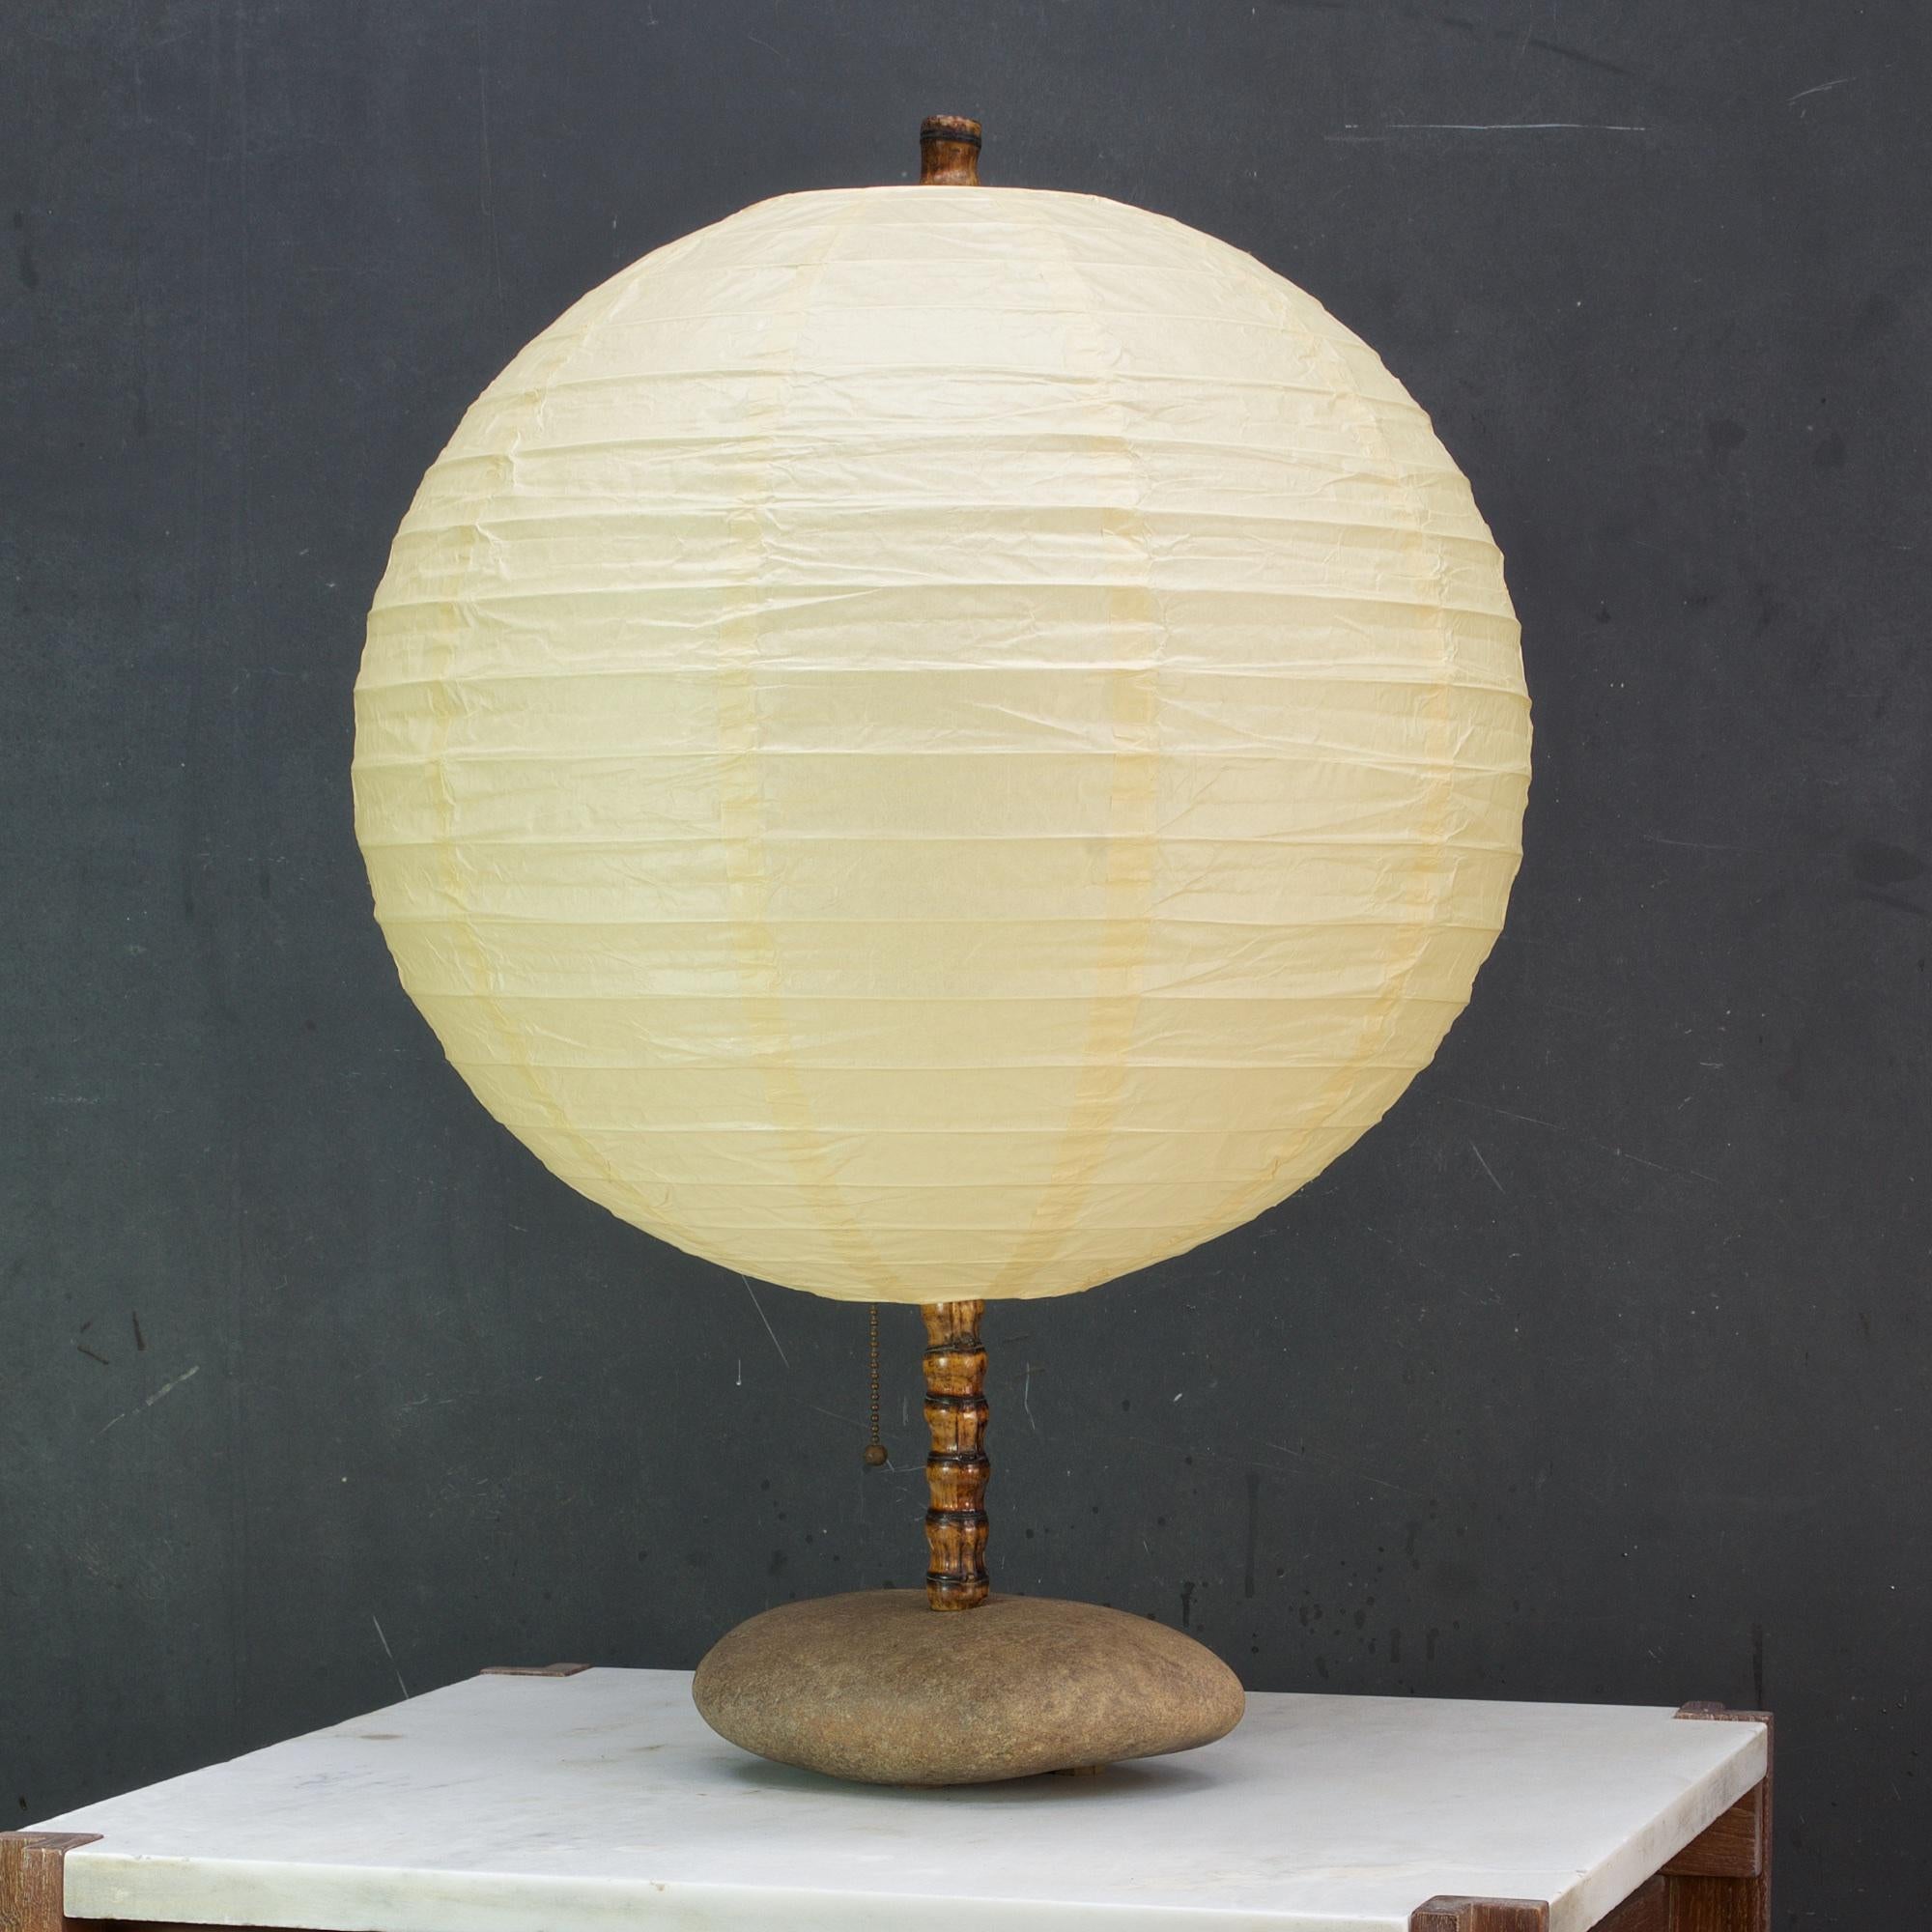 Neoprimitive River Stone Table Lamp Inspired by Isamu Noguchi Akari Lights (Böhmisch)